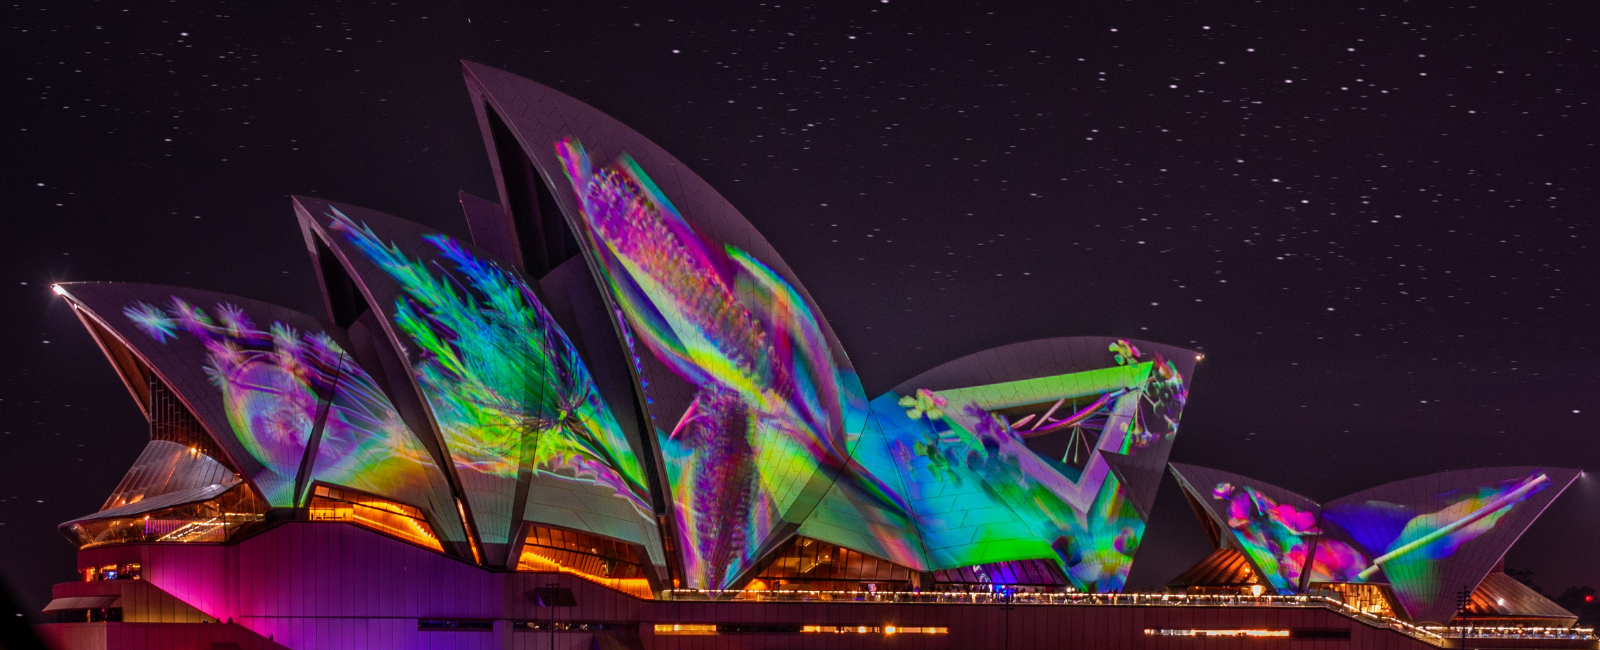 Sydney, Australia Sydney Opera House with light display